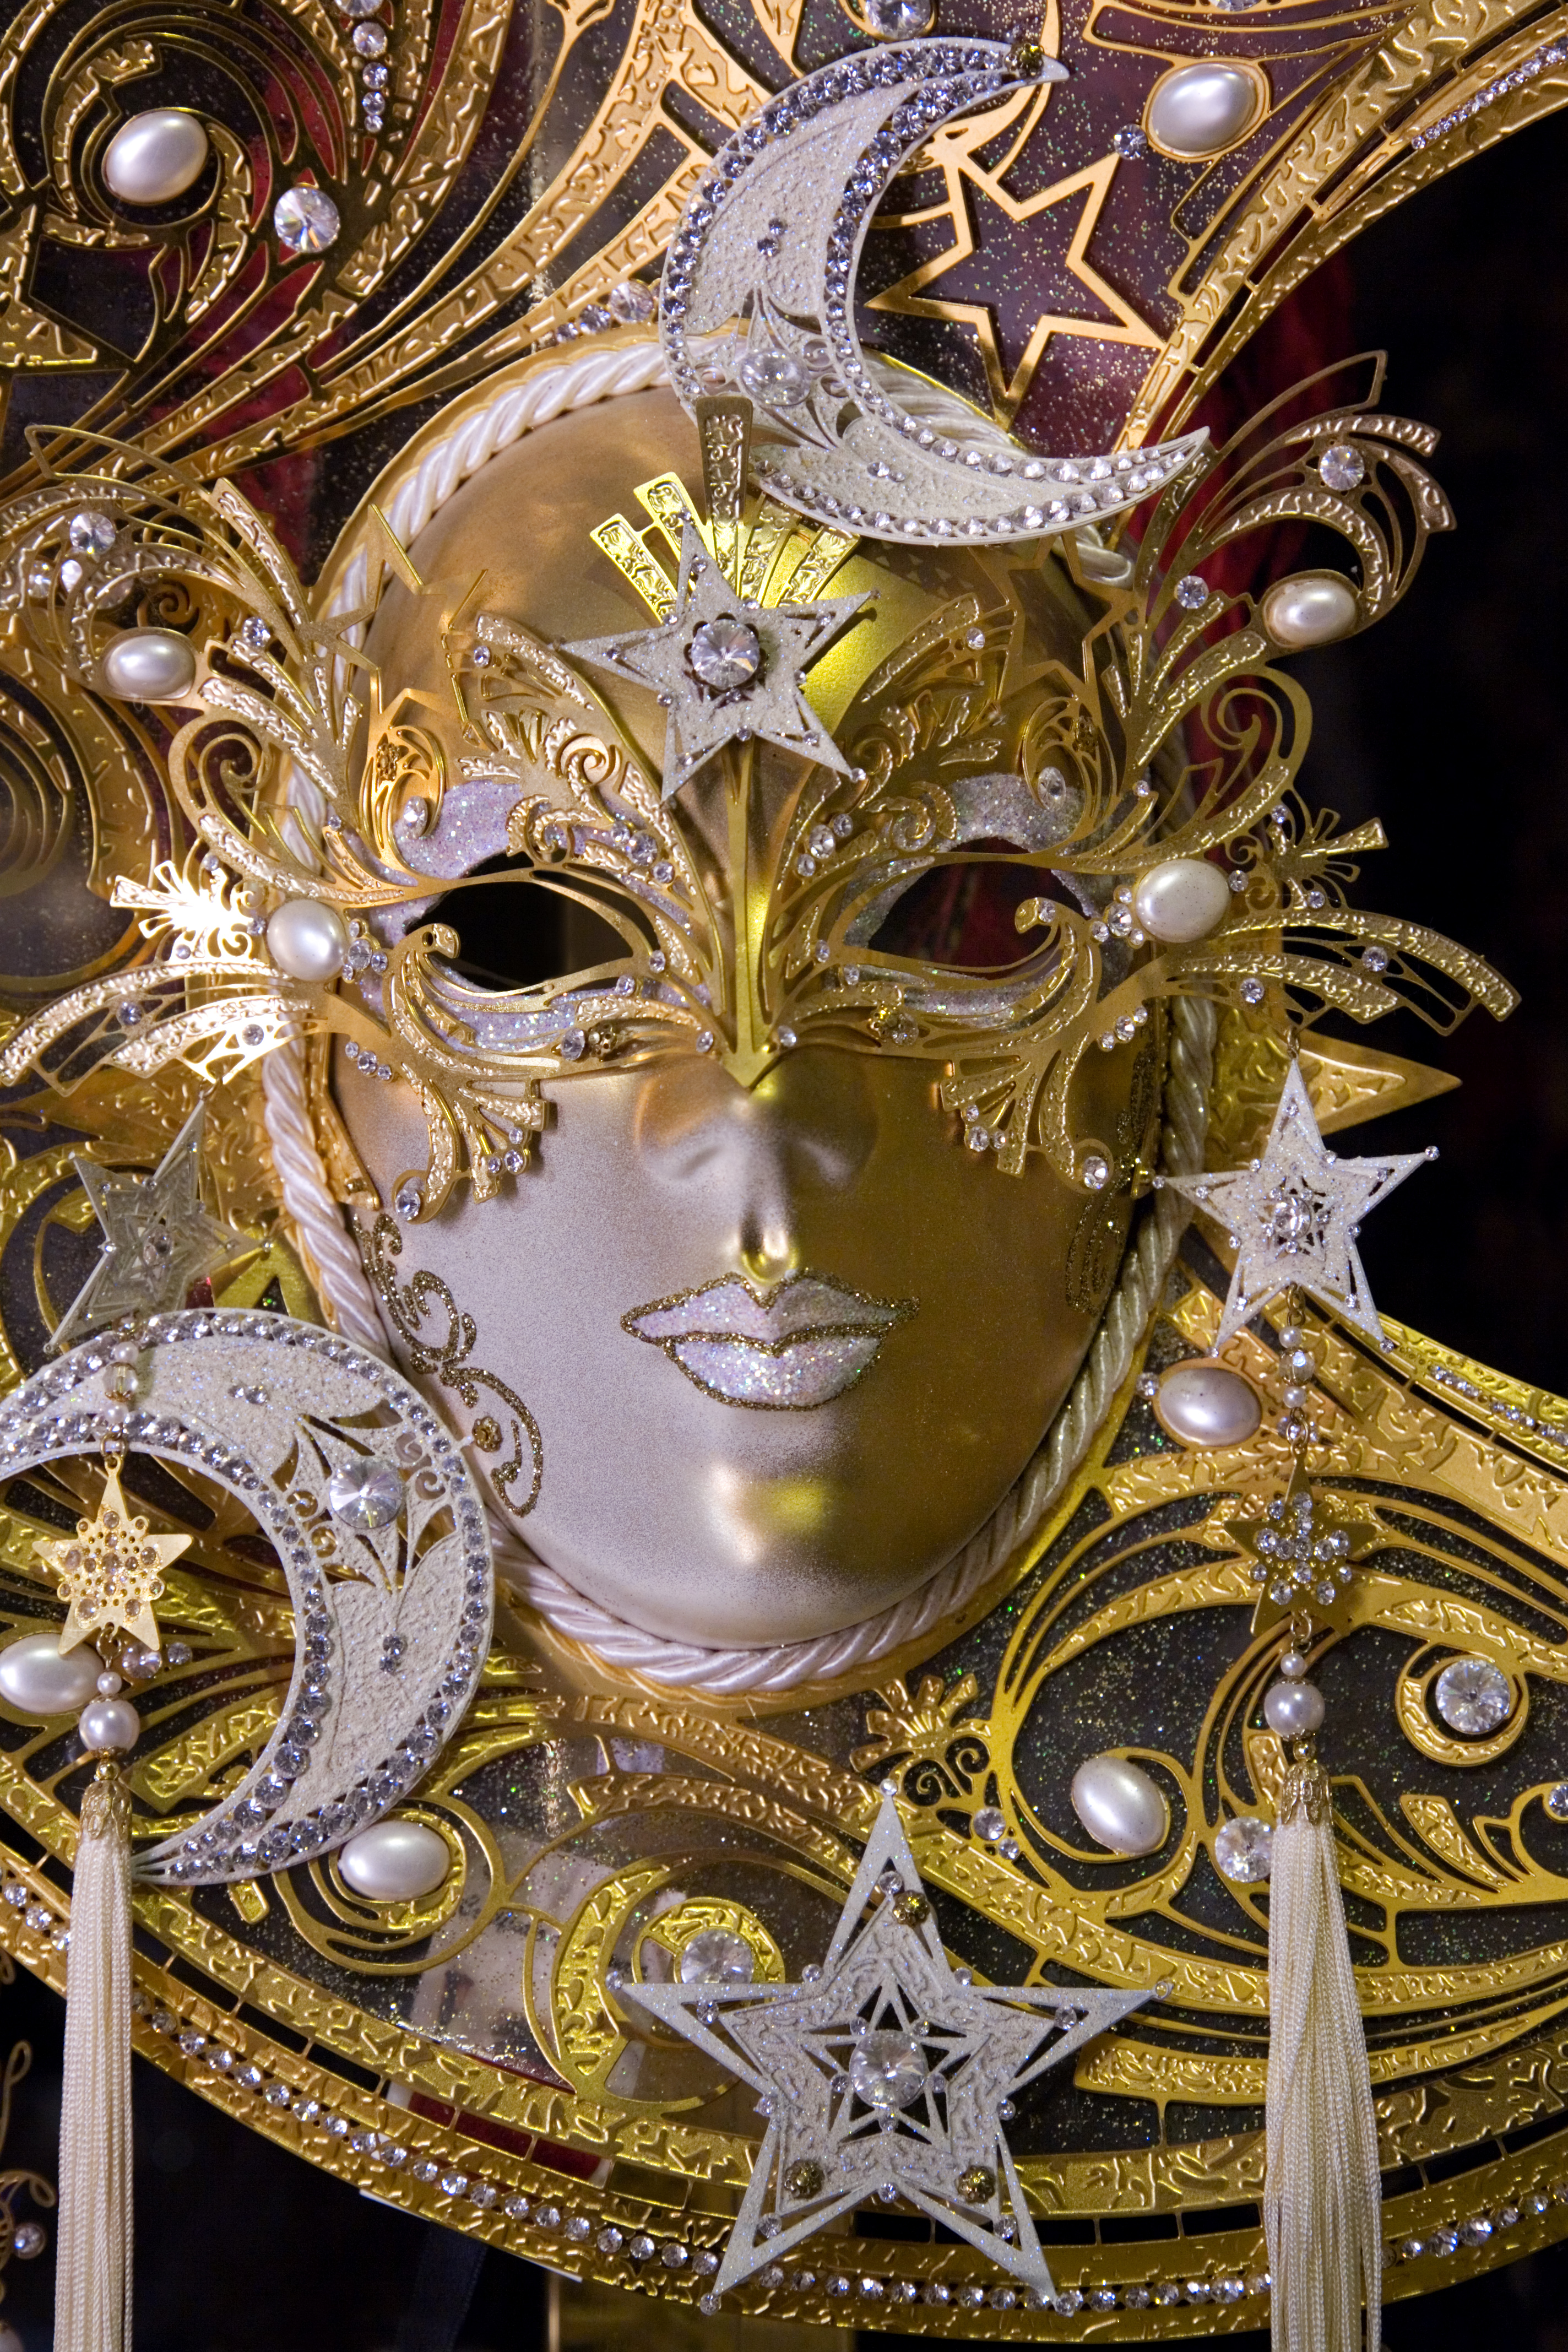 https://upload.wikimedia.org/wikipedia/commons/7/74/Venice_-_Carnival_masks_-_4021.jpg